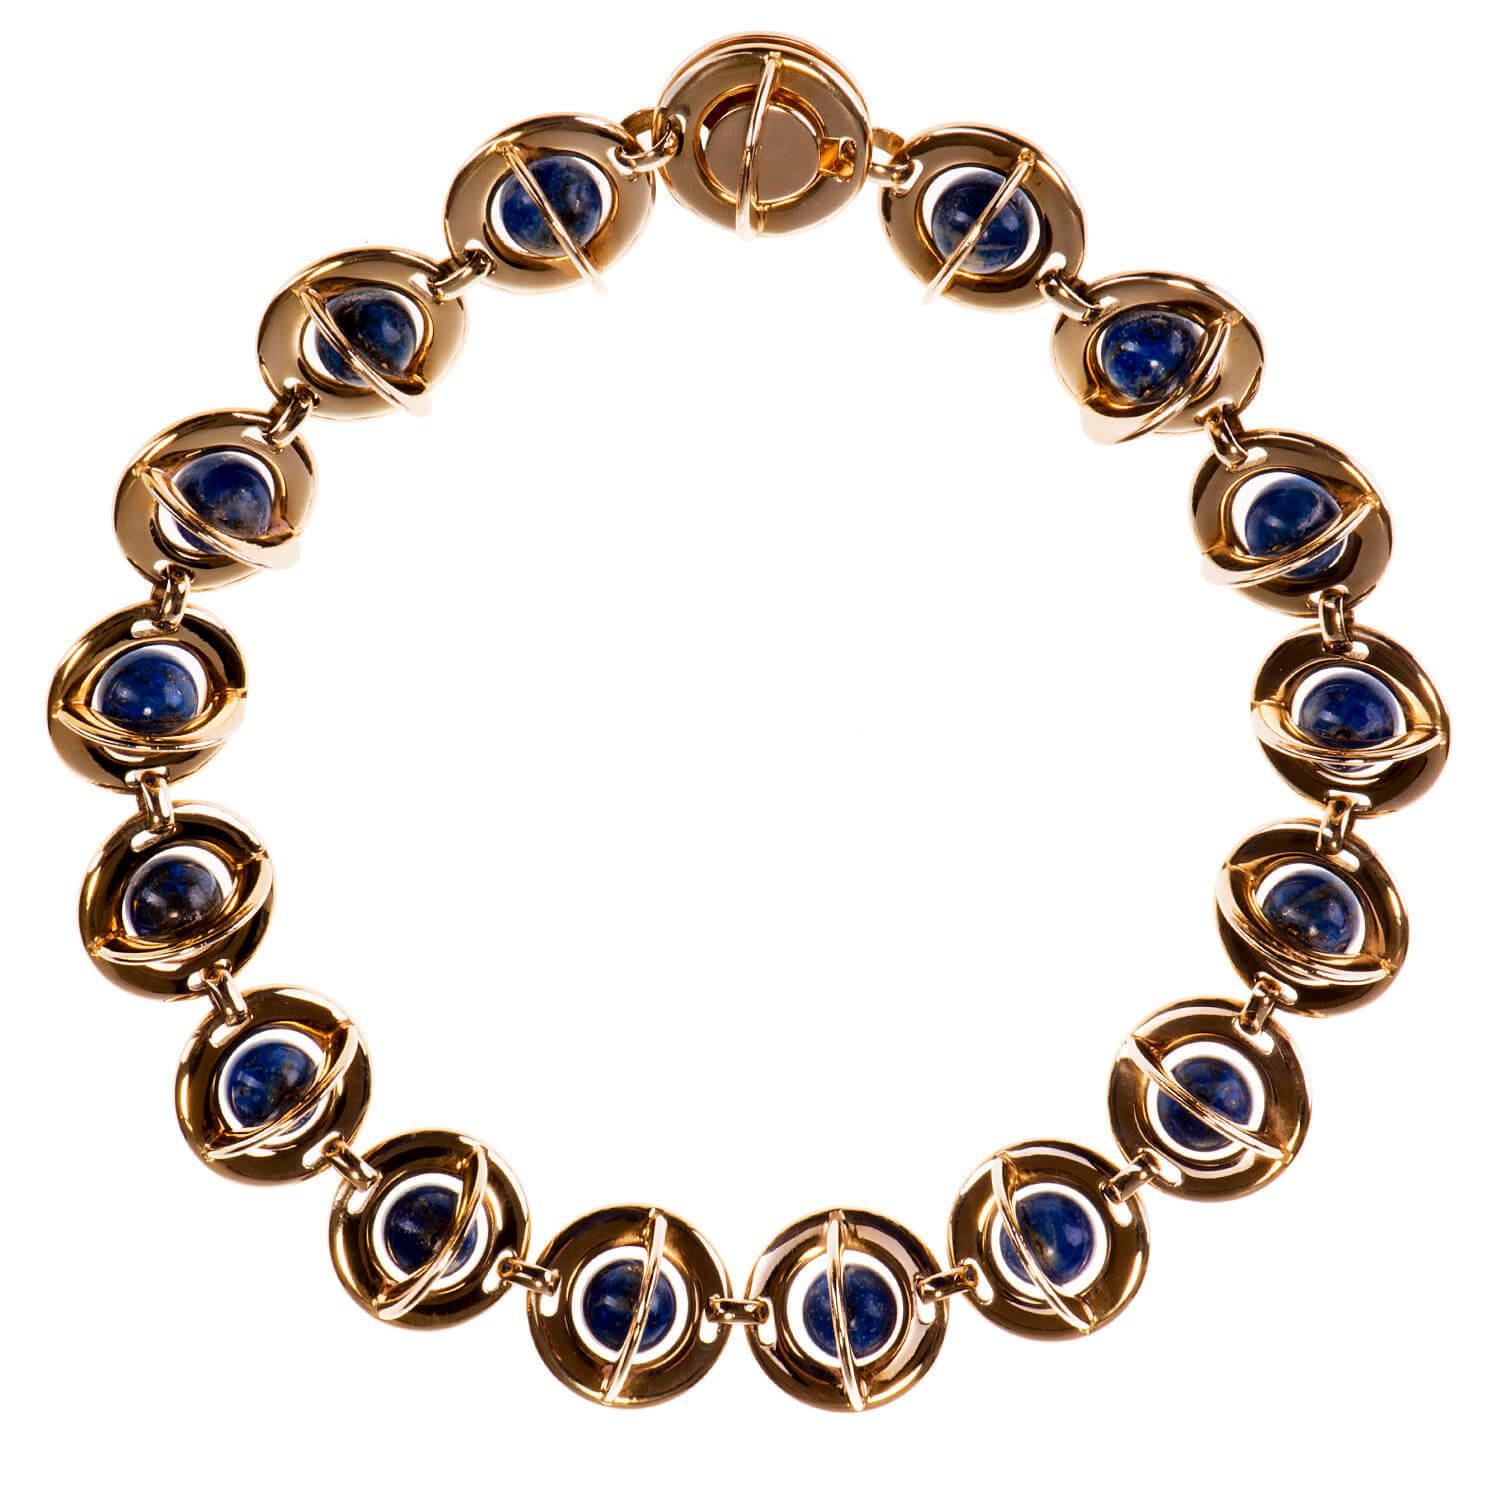 A Rare  Vintage Lazuli & Gold Metal Necklace by Burma of Paris